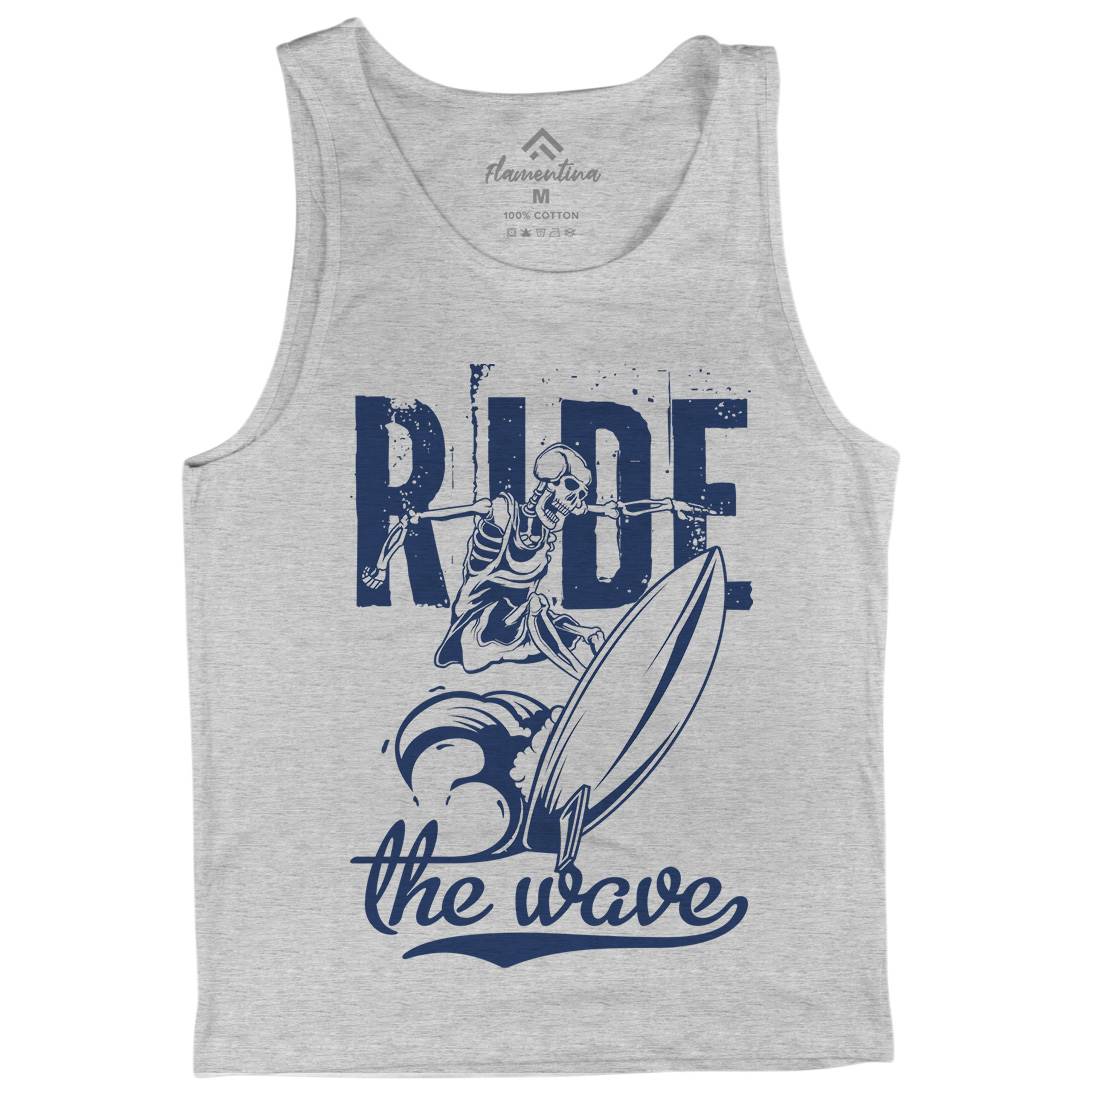 Ride Wave Surfing Mens Tank Top Vest Surf B173